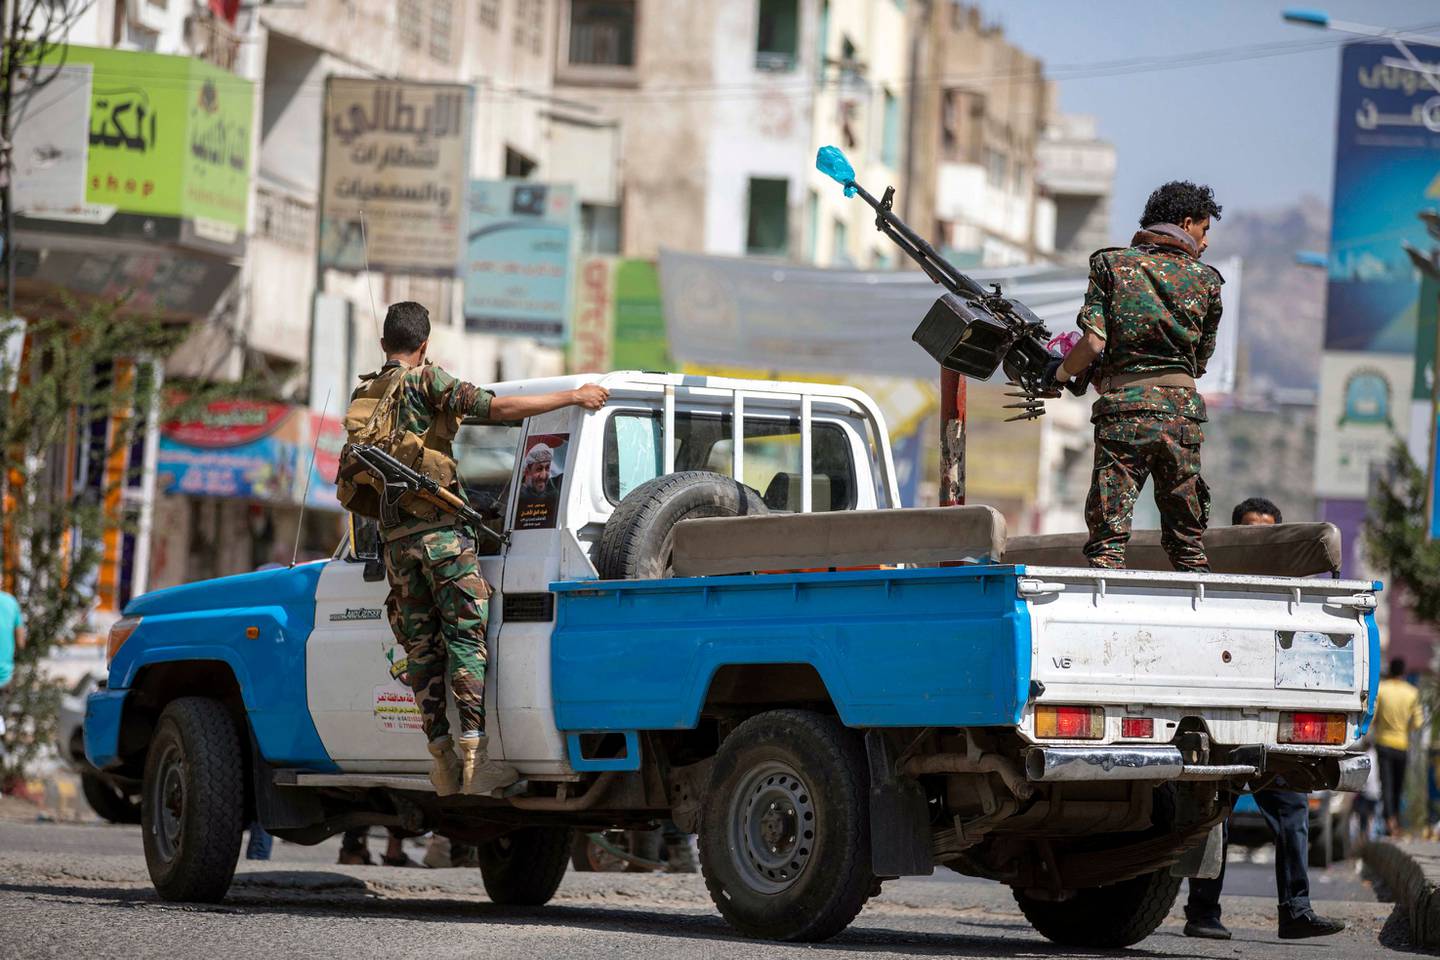 Yemeni security forces patrol an area in Taez, Yemen's third city. AFP